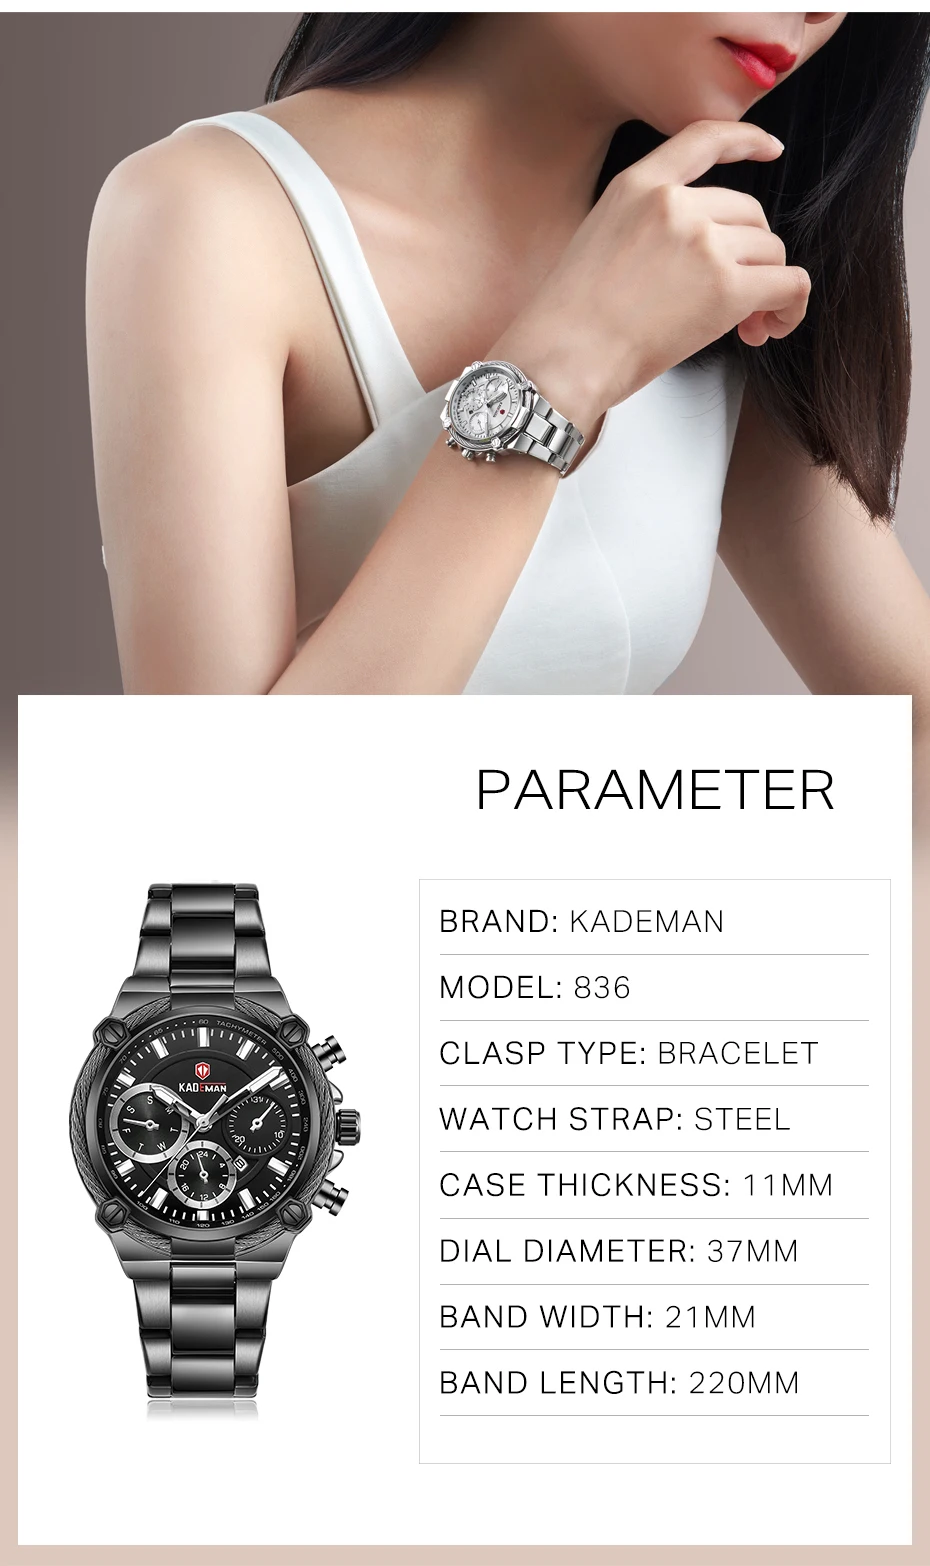 Kademan Full Steel Luxury Ladies Wristwatches TOP Quality Brand Design Women Watches 3ATM New Fashion Female Business